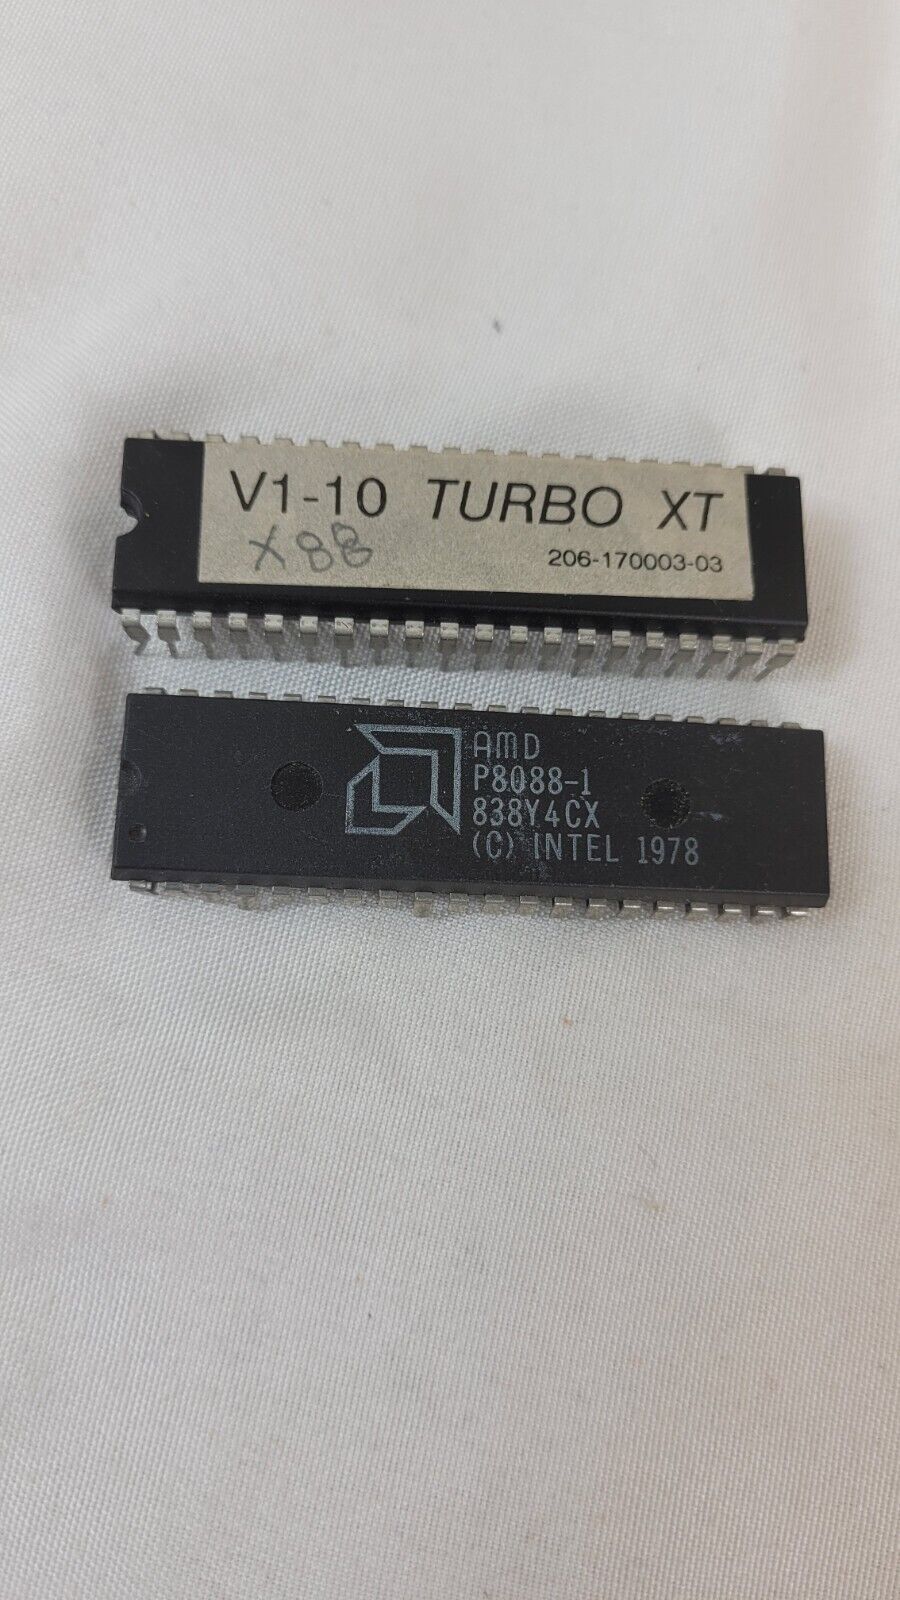 AMD P8088-2 CPU 8MHz DIP40 5V Processor x86 & V1-10 TURBO XT 1978